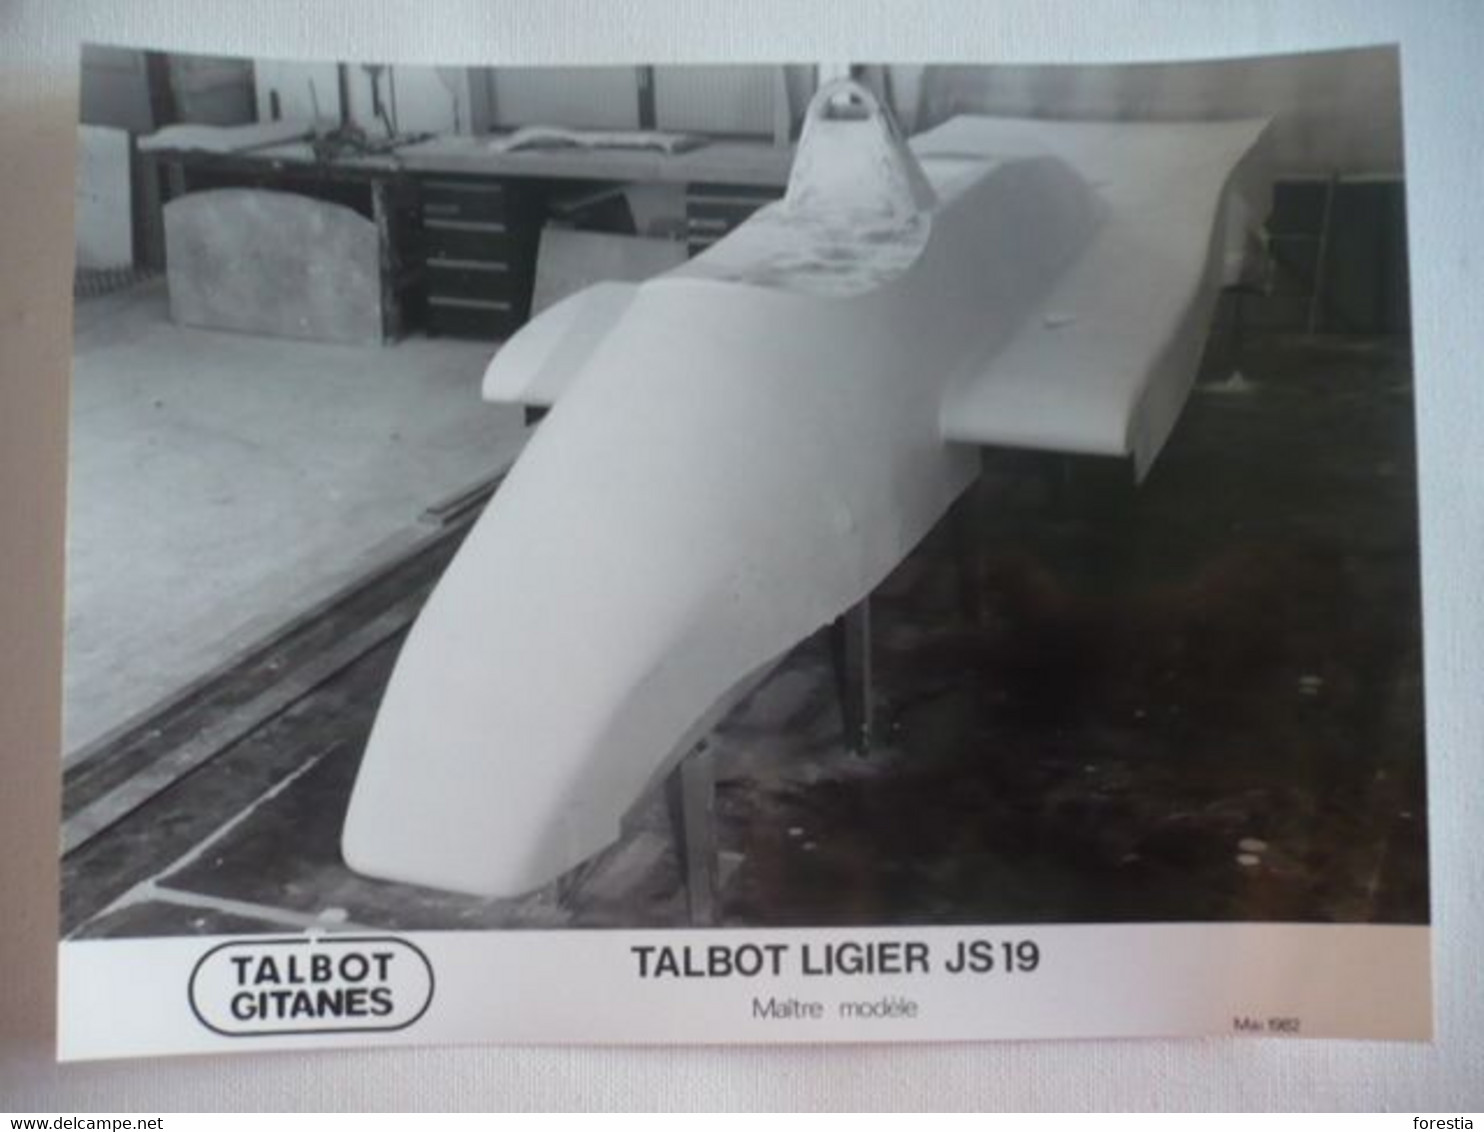 Photo Formule 1 - TALBOT GITANES - Talbot Ligier JS 19 - Maître Modèle - Mai 1982 - Automobile - F1